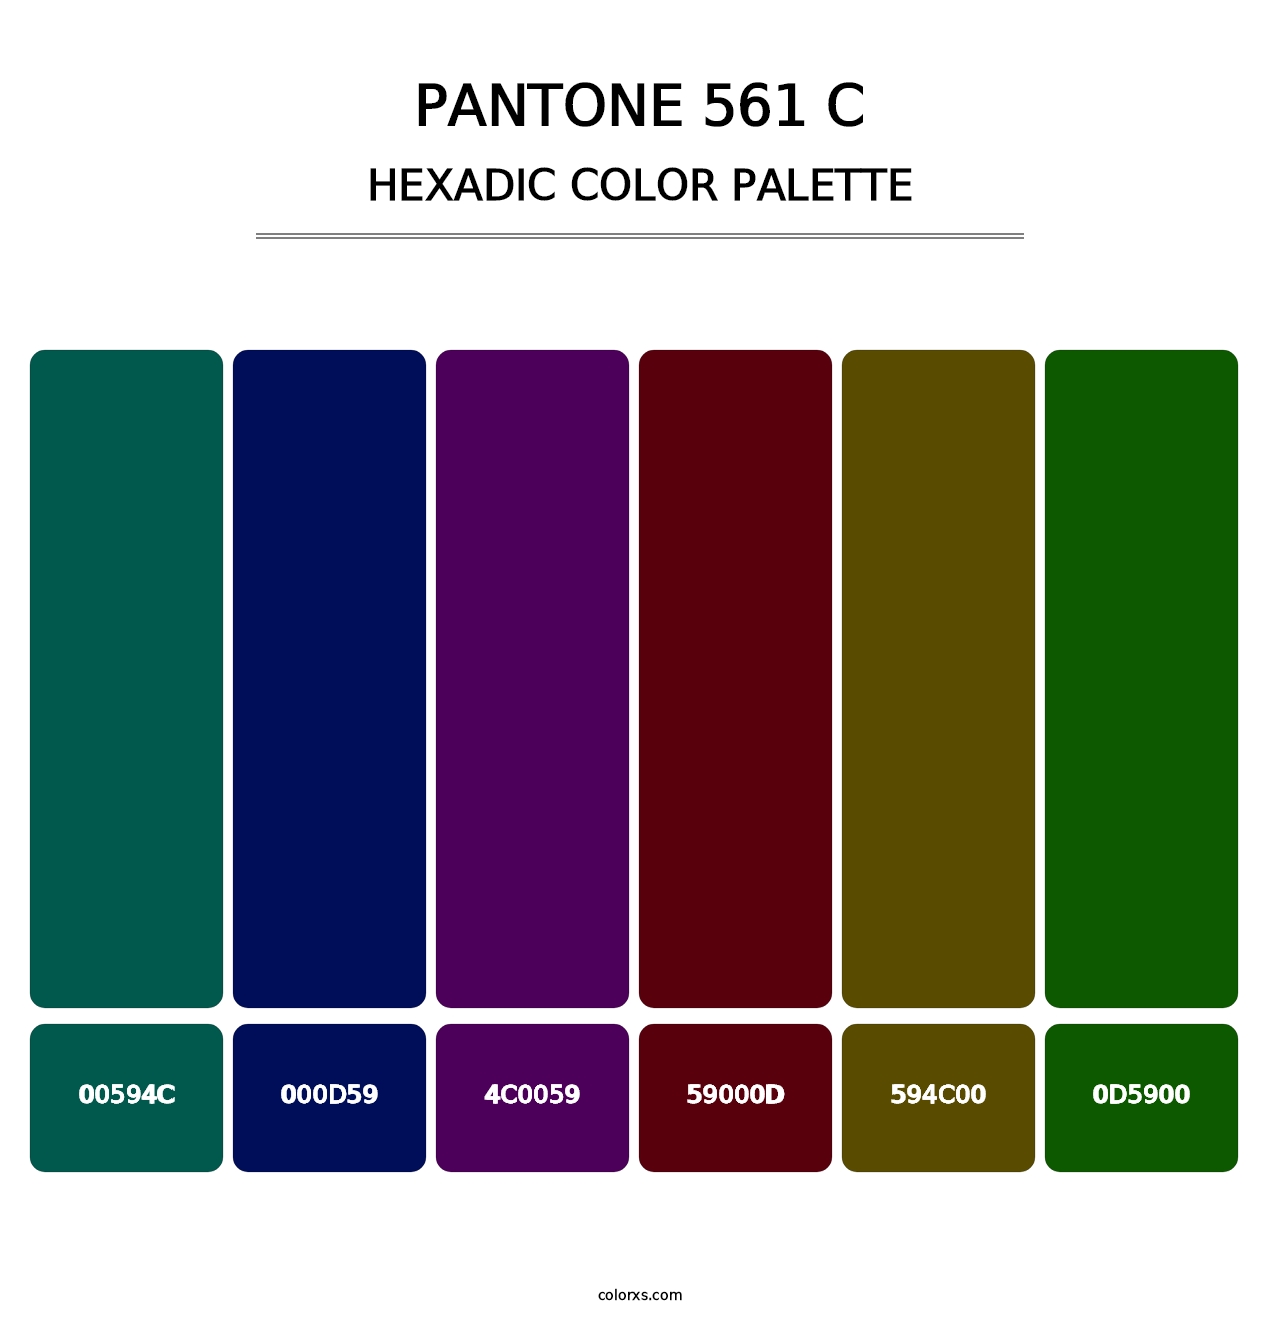 PANTONE 561 C - Hexadic Color Palette